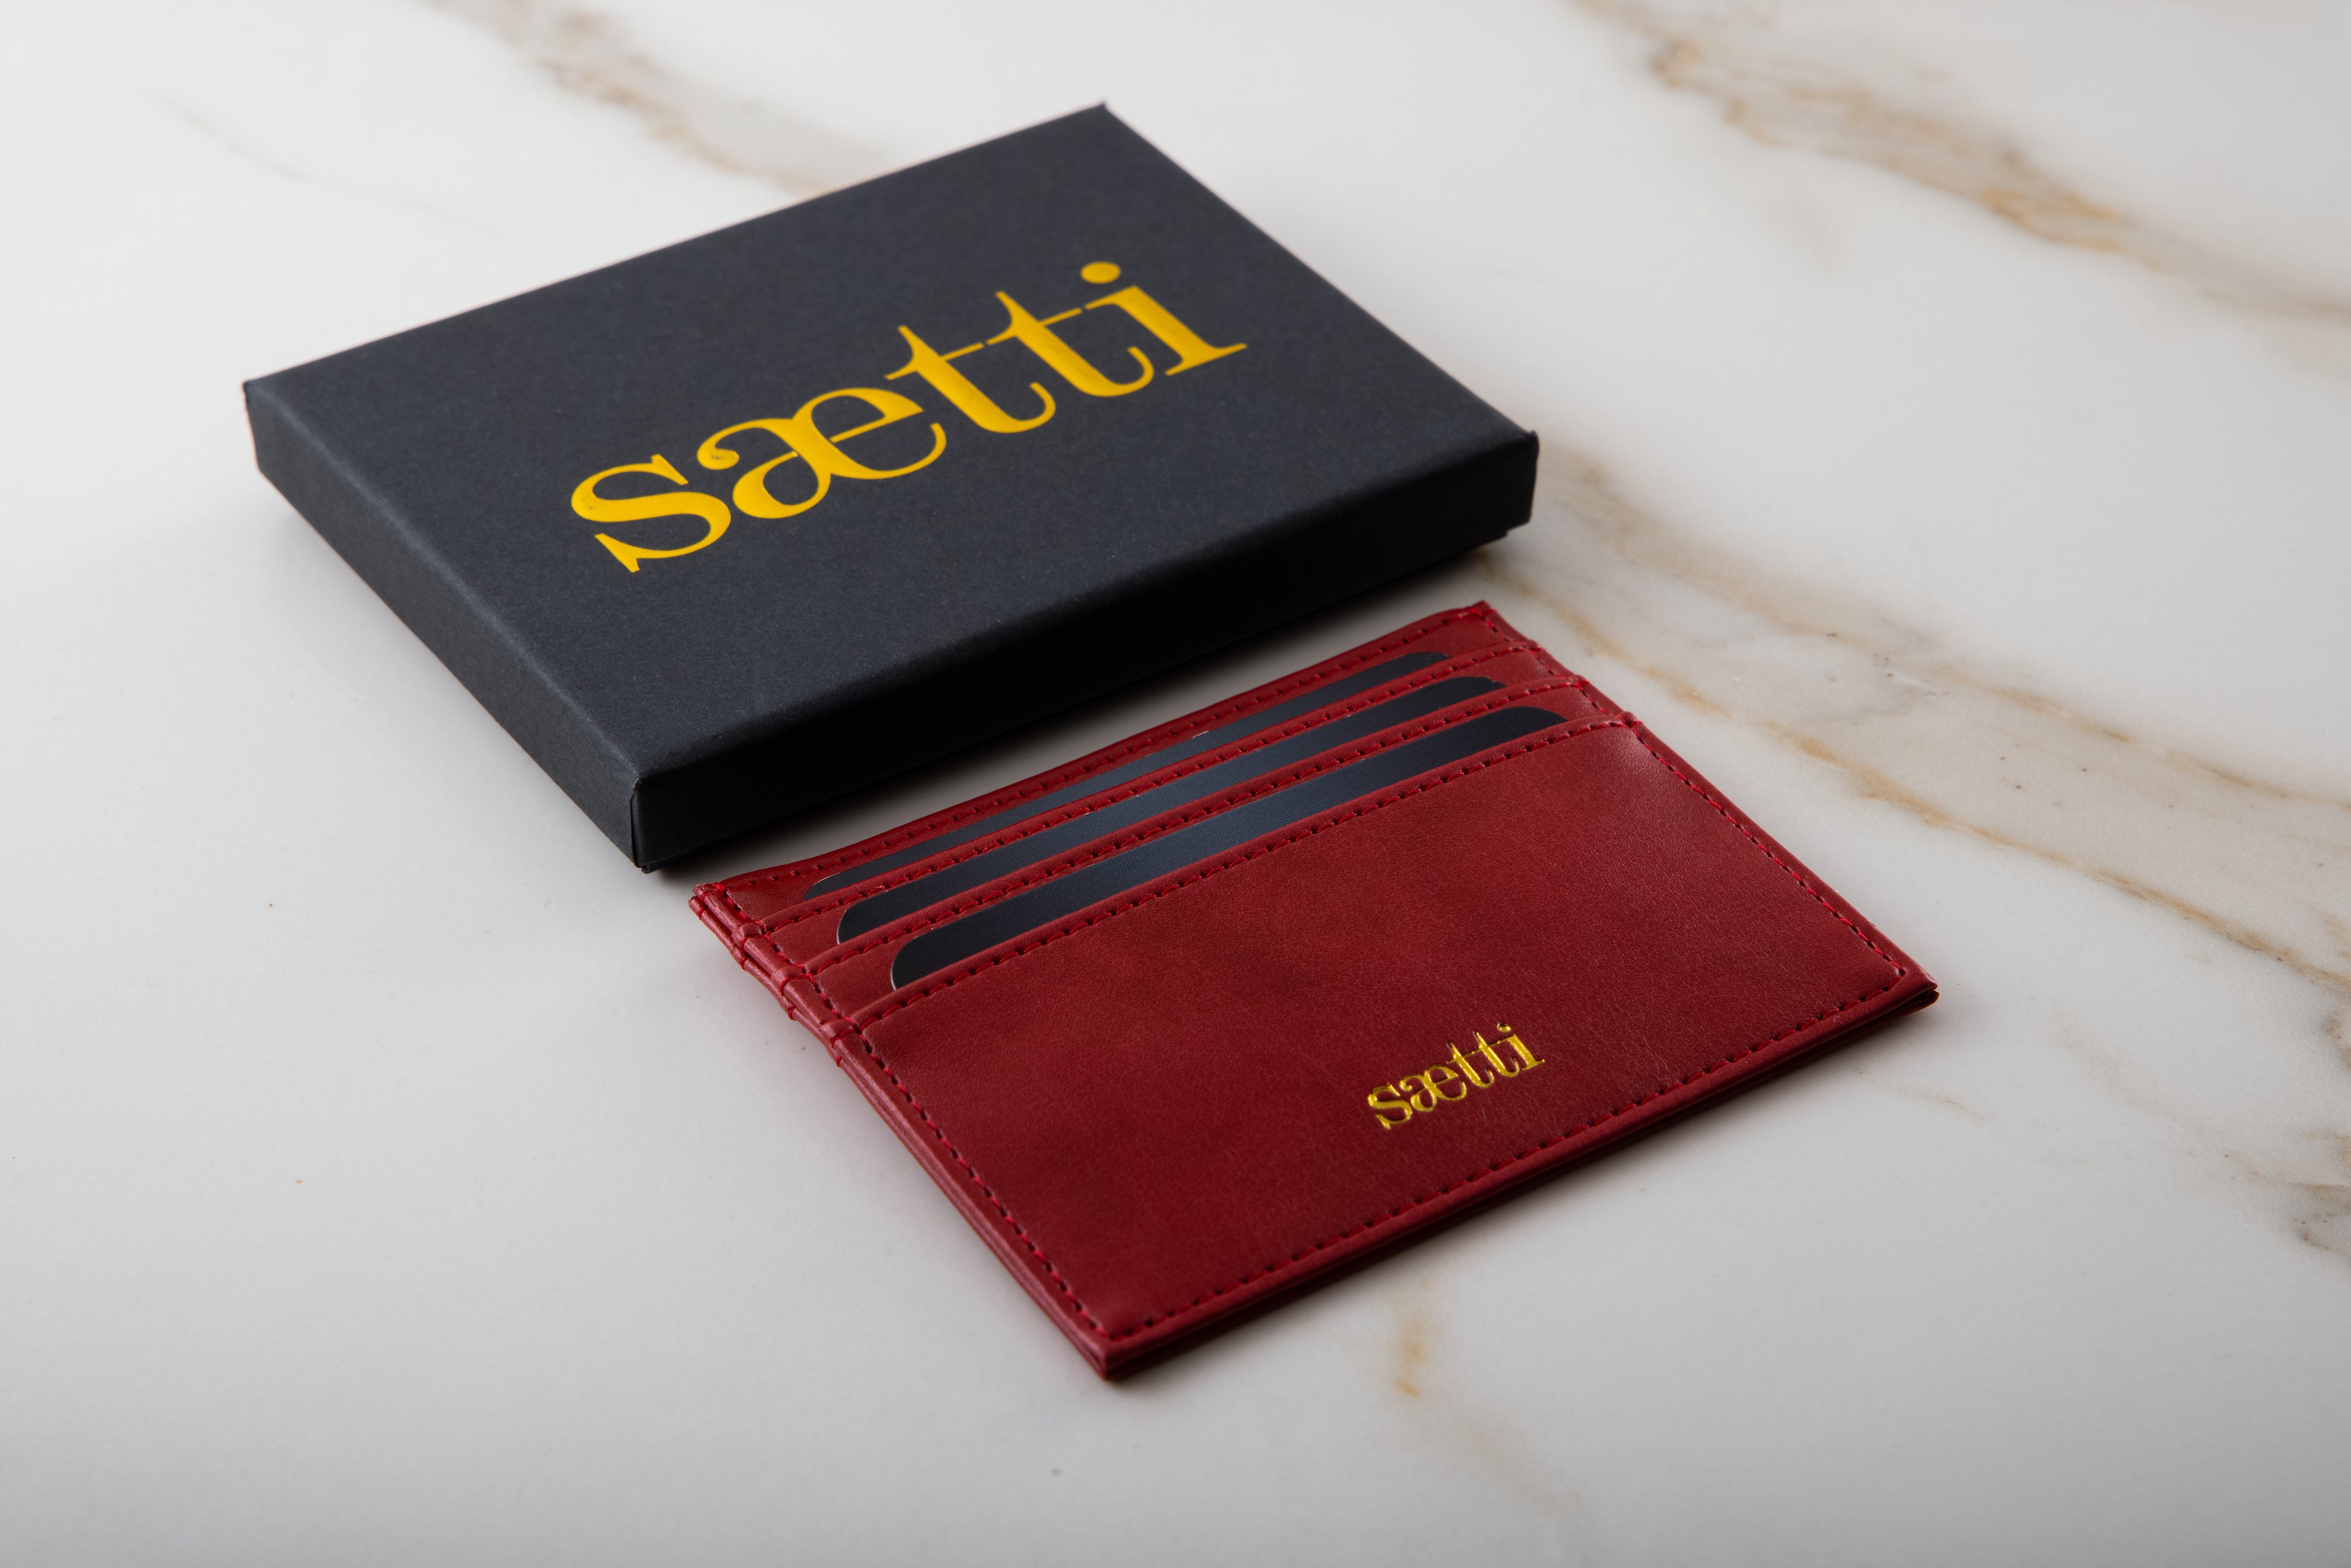 Mini Premium Wallet Cardholder - Burgundy Red